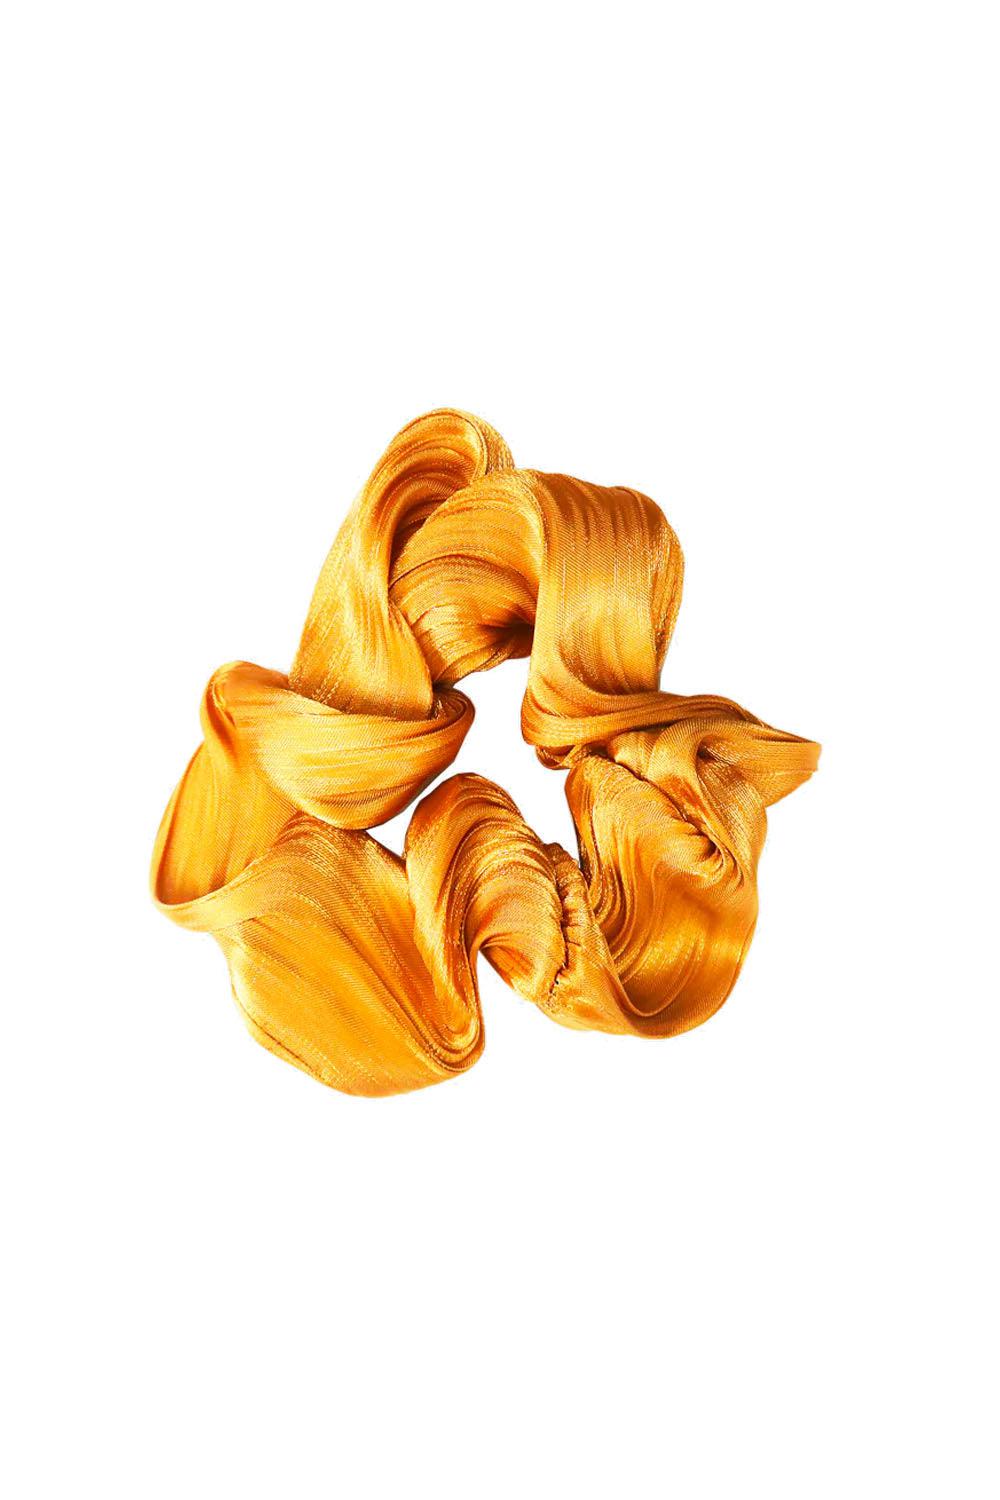 Sistie scrunchie Gold in silk-inspired fabric